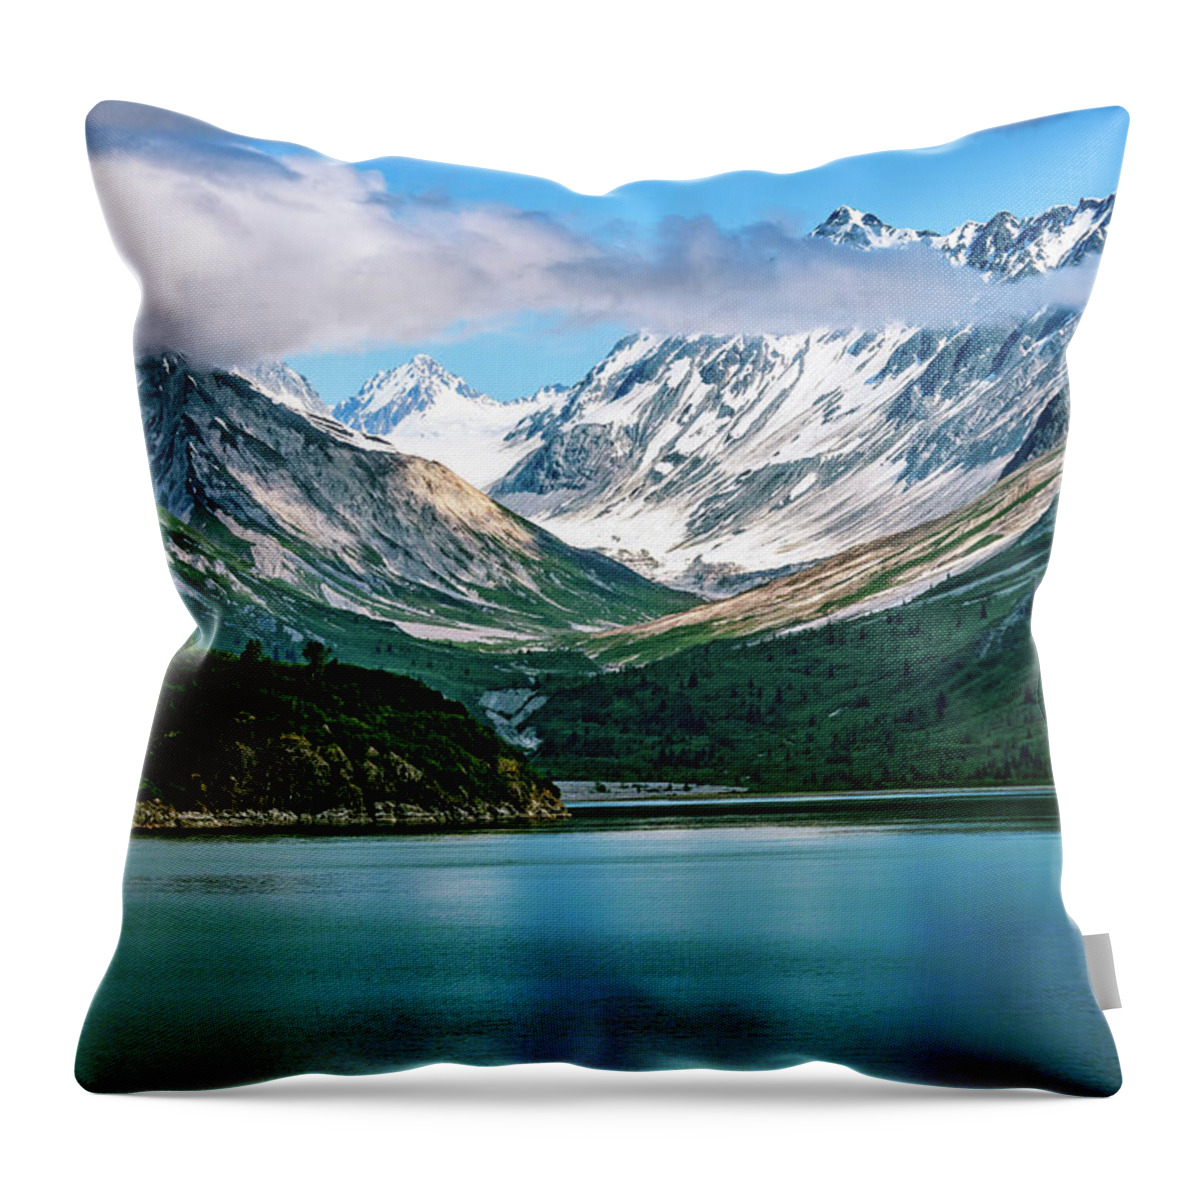 Alaska Throw Pillow featuring the photograph Glacial Valley by John Hight